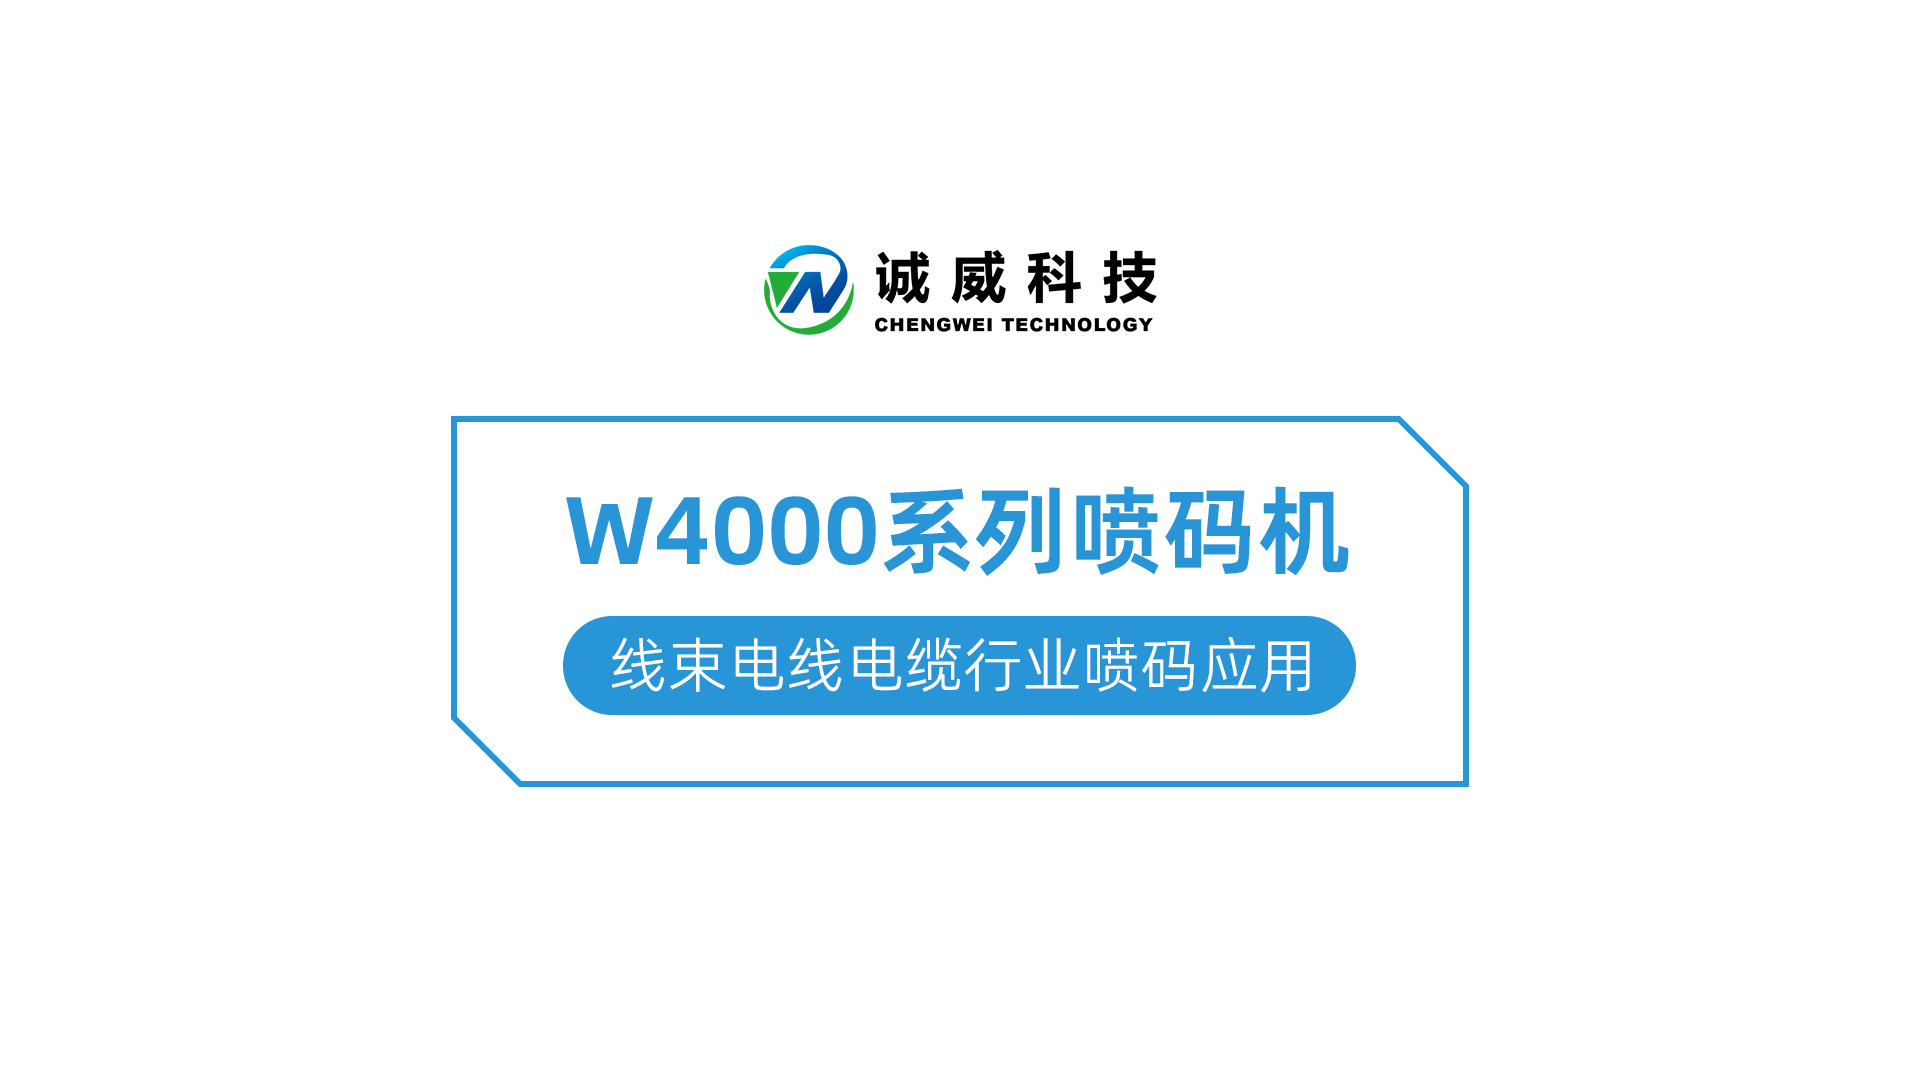 W4000系列喷码机-线束电线电缆行业喷码应用.jpg